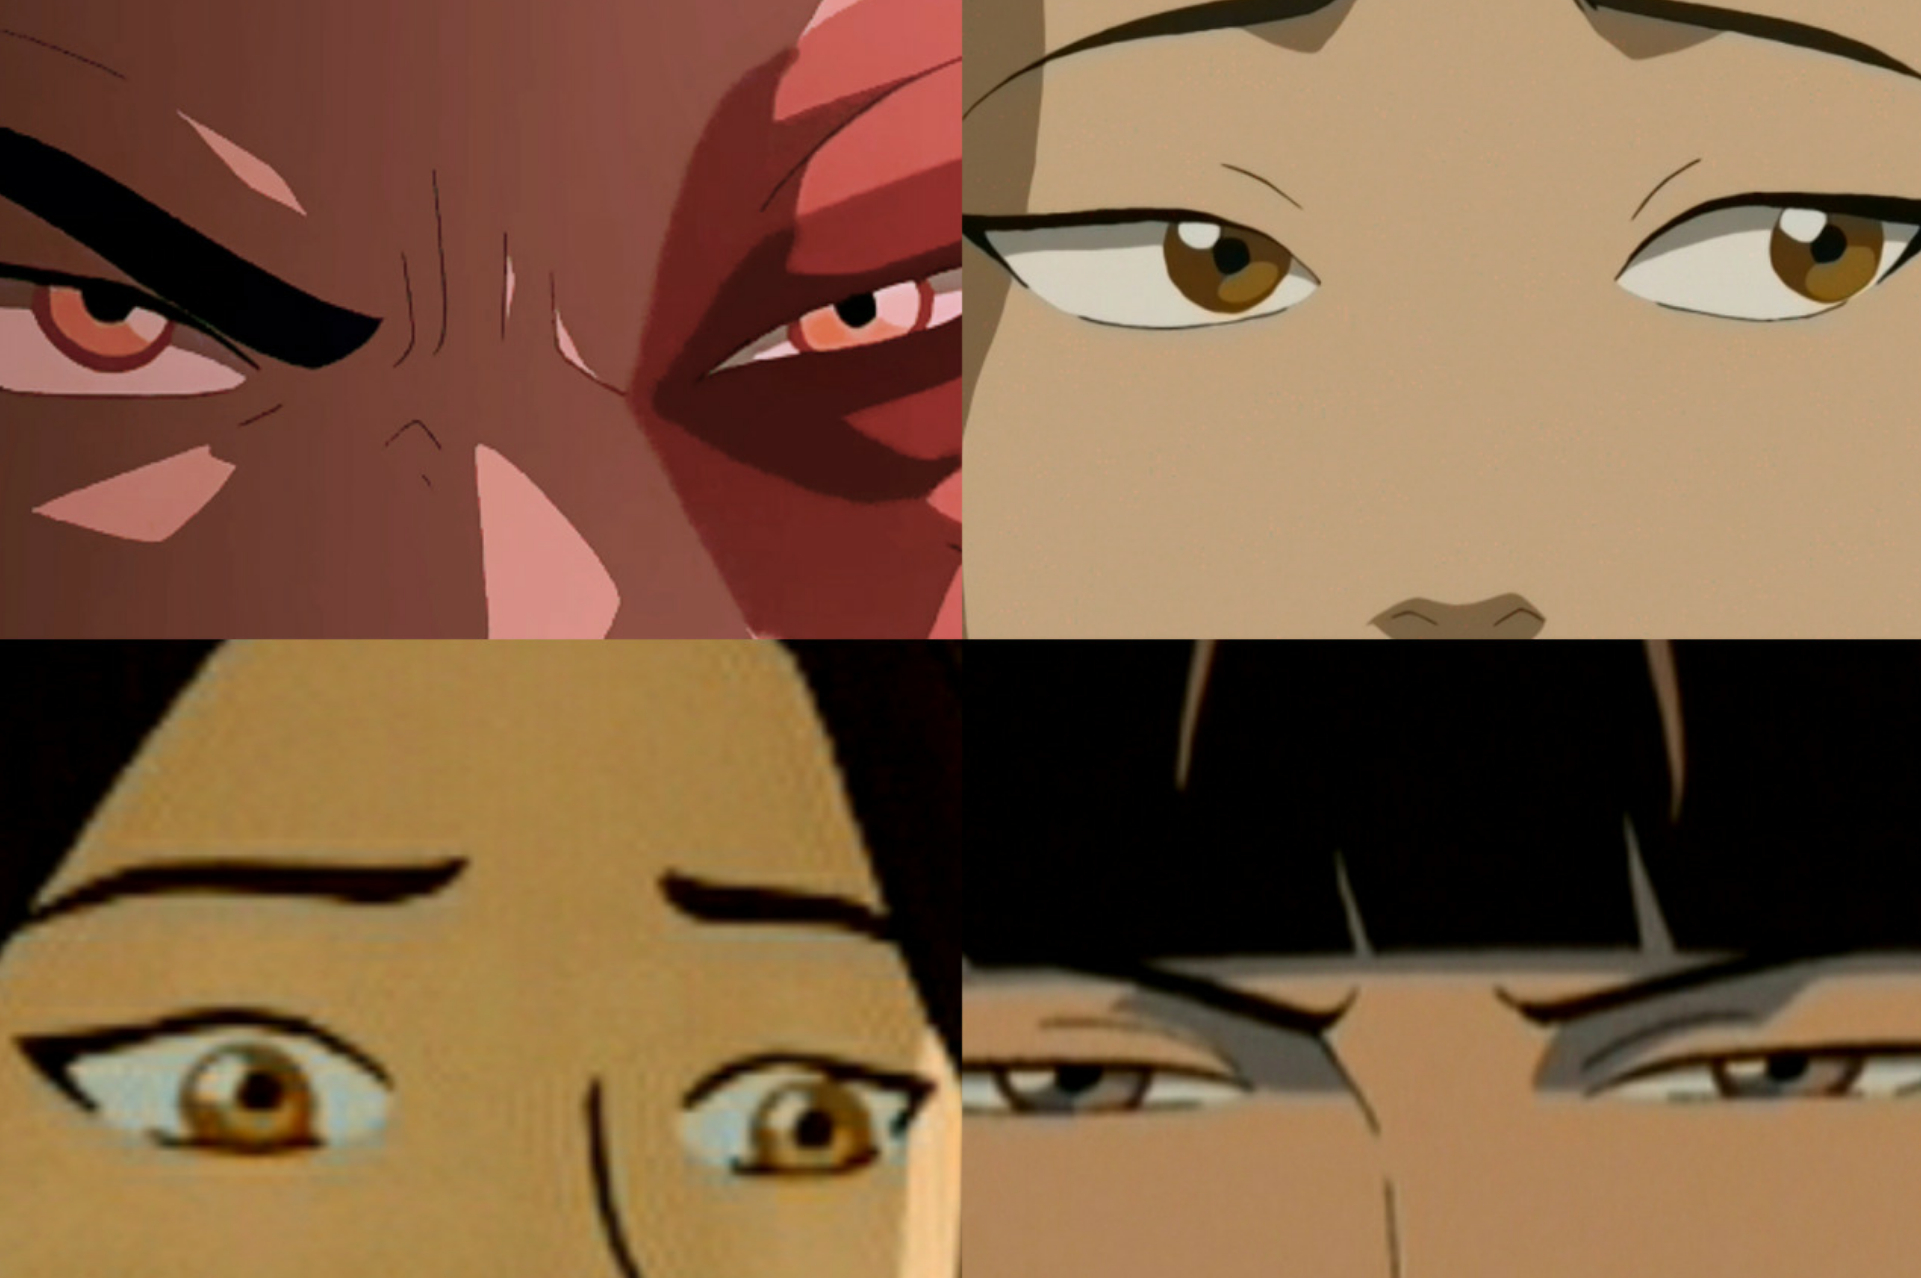 Avatar The Last Airbender Eyes